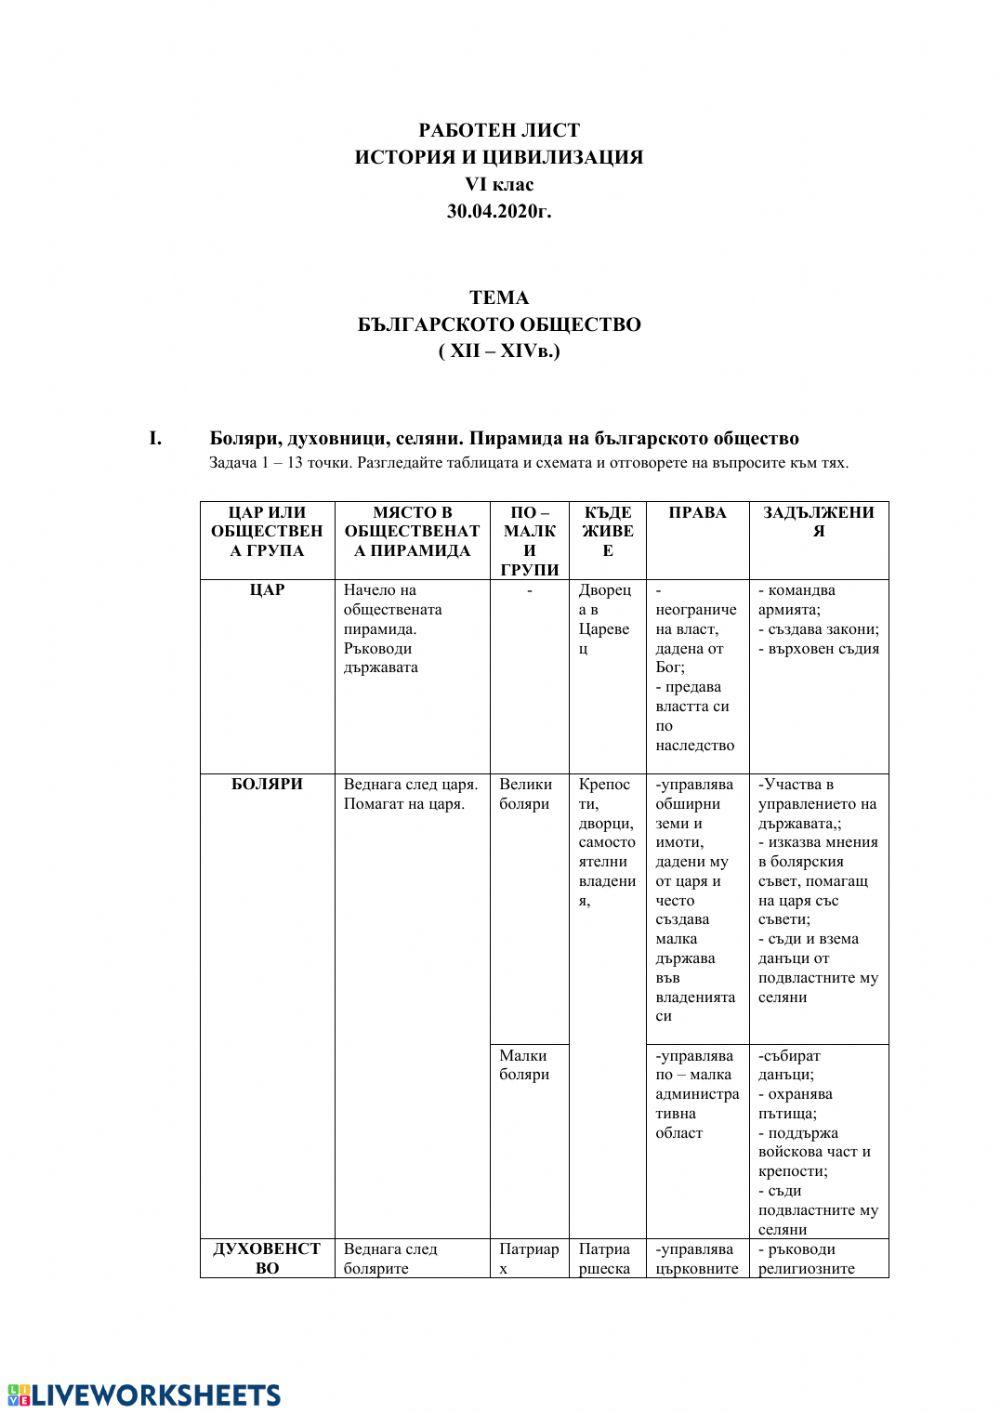 Работен лист - Българското общество (XII - XIVв.)